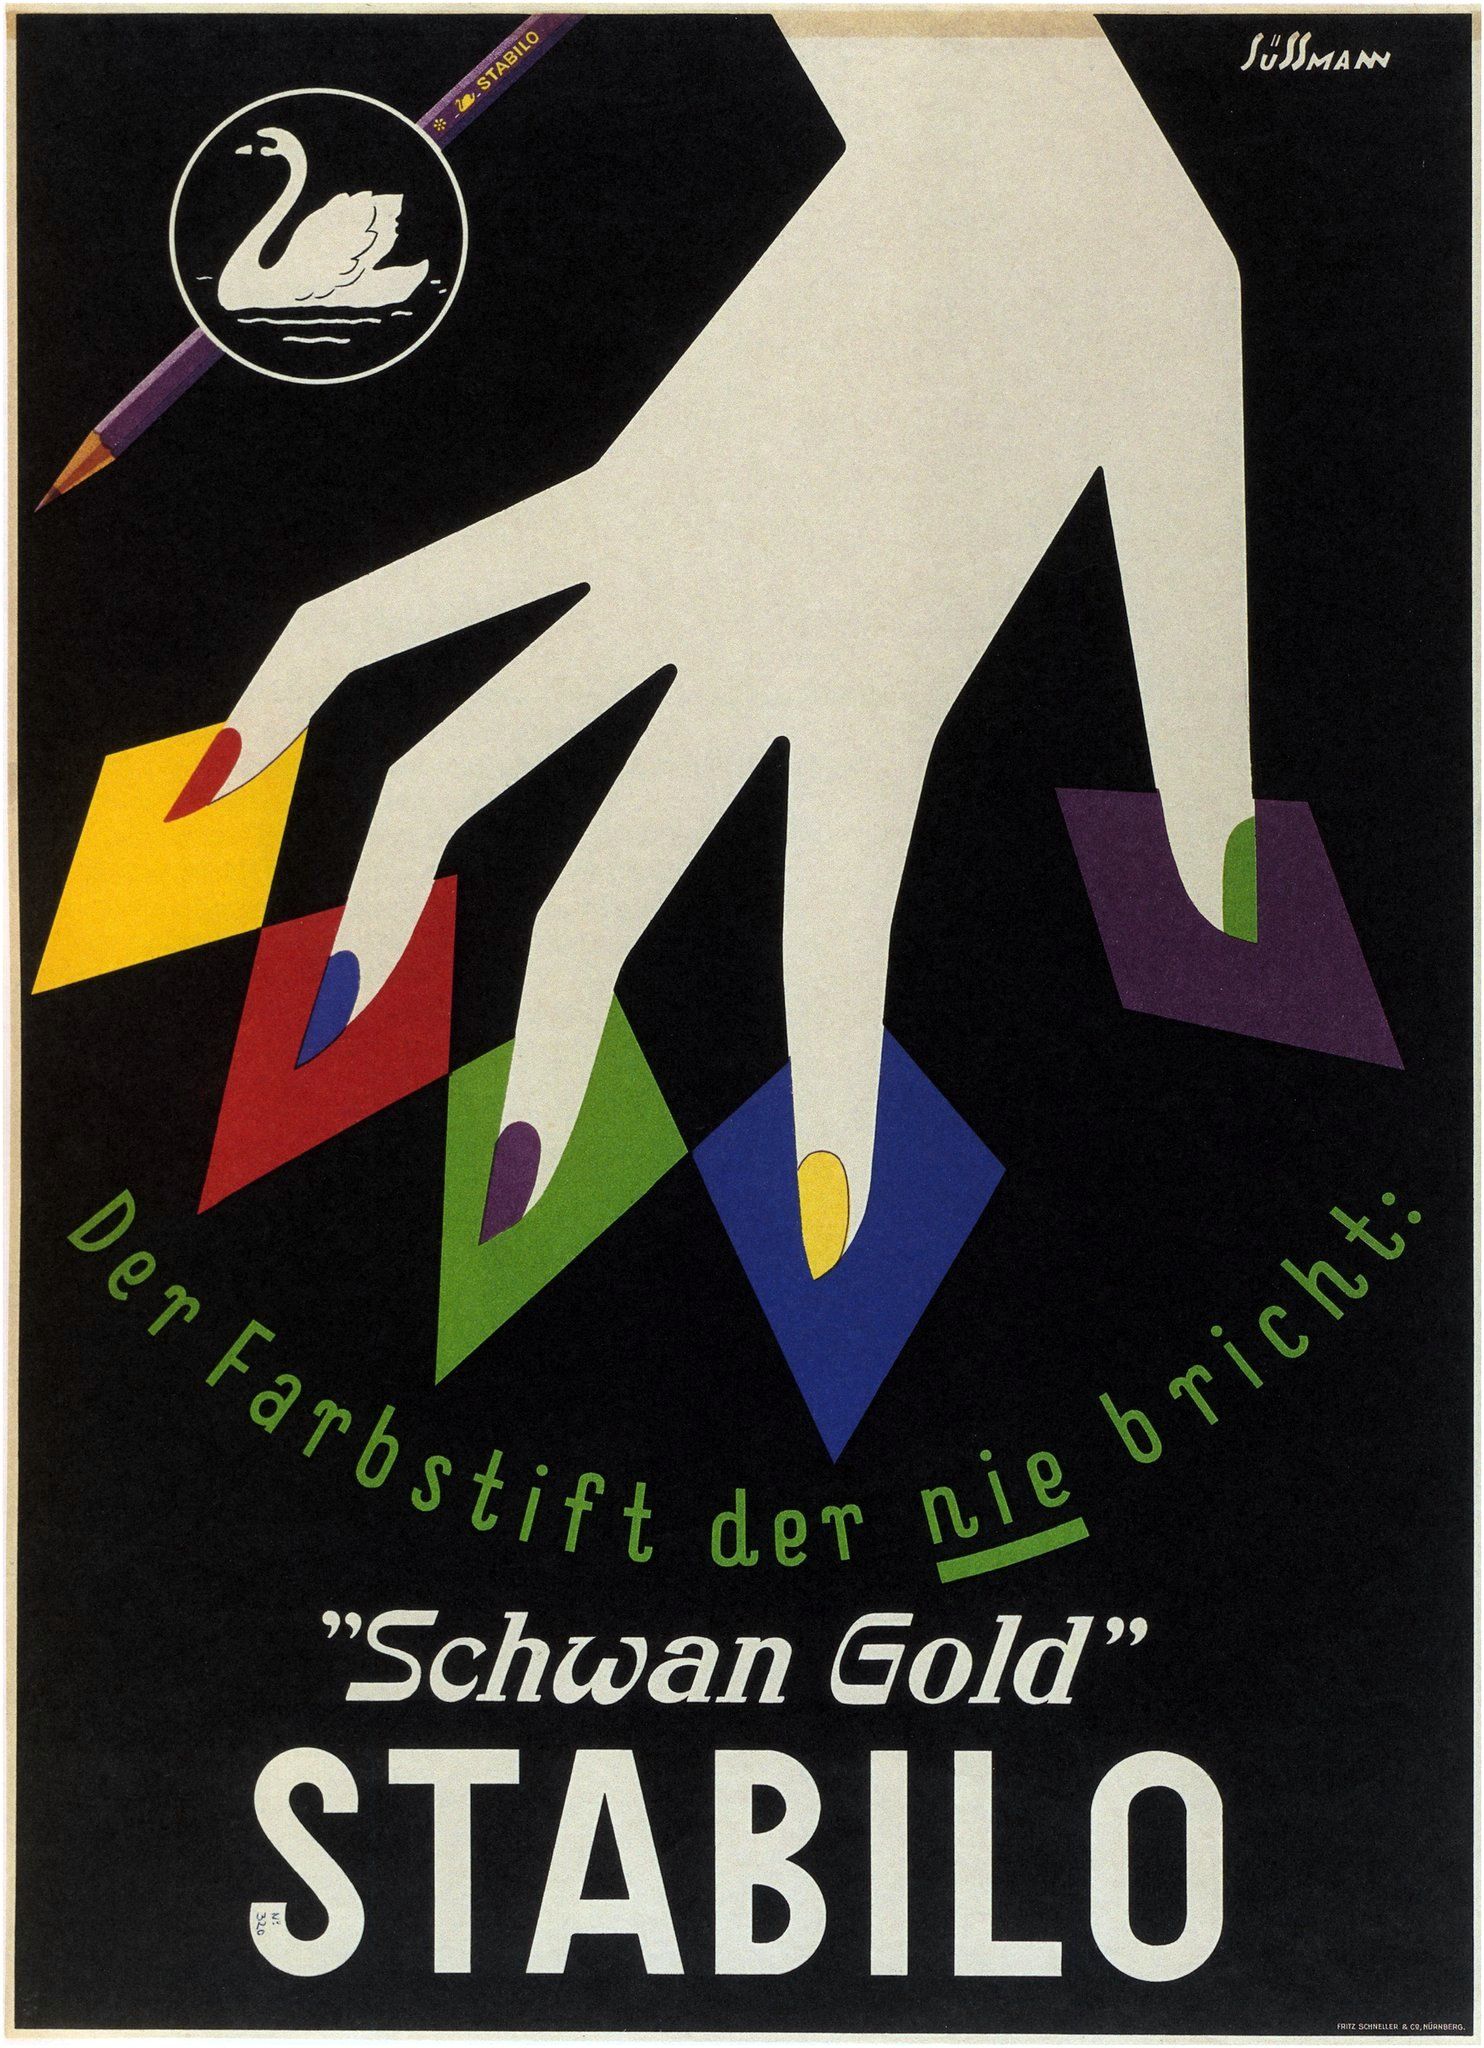 Stabilo. 1920 | Vintage advertising poster